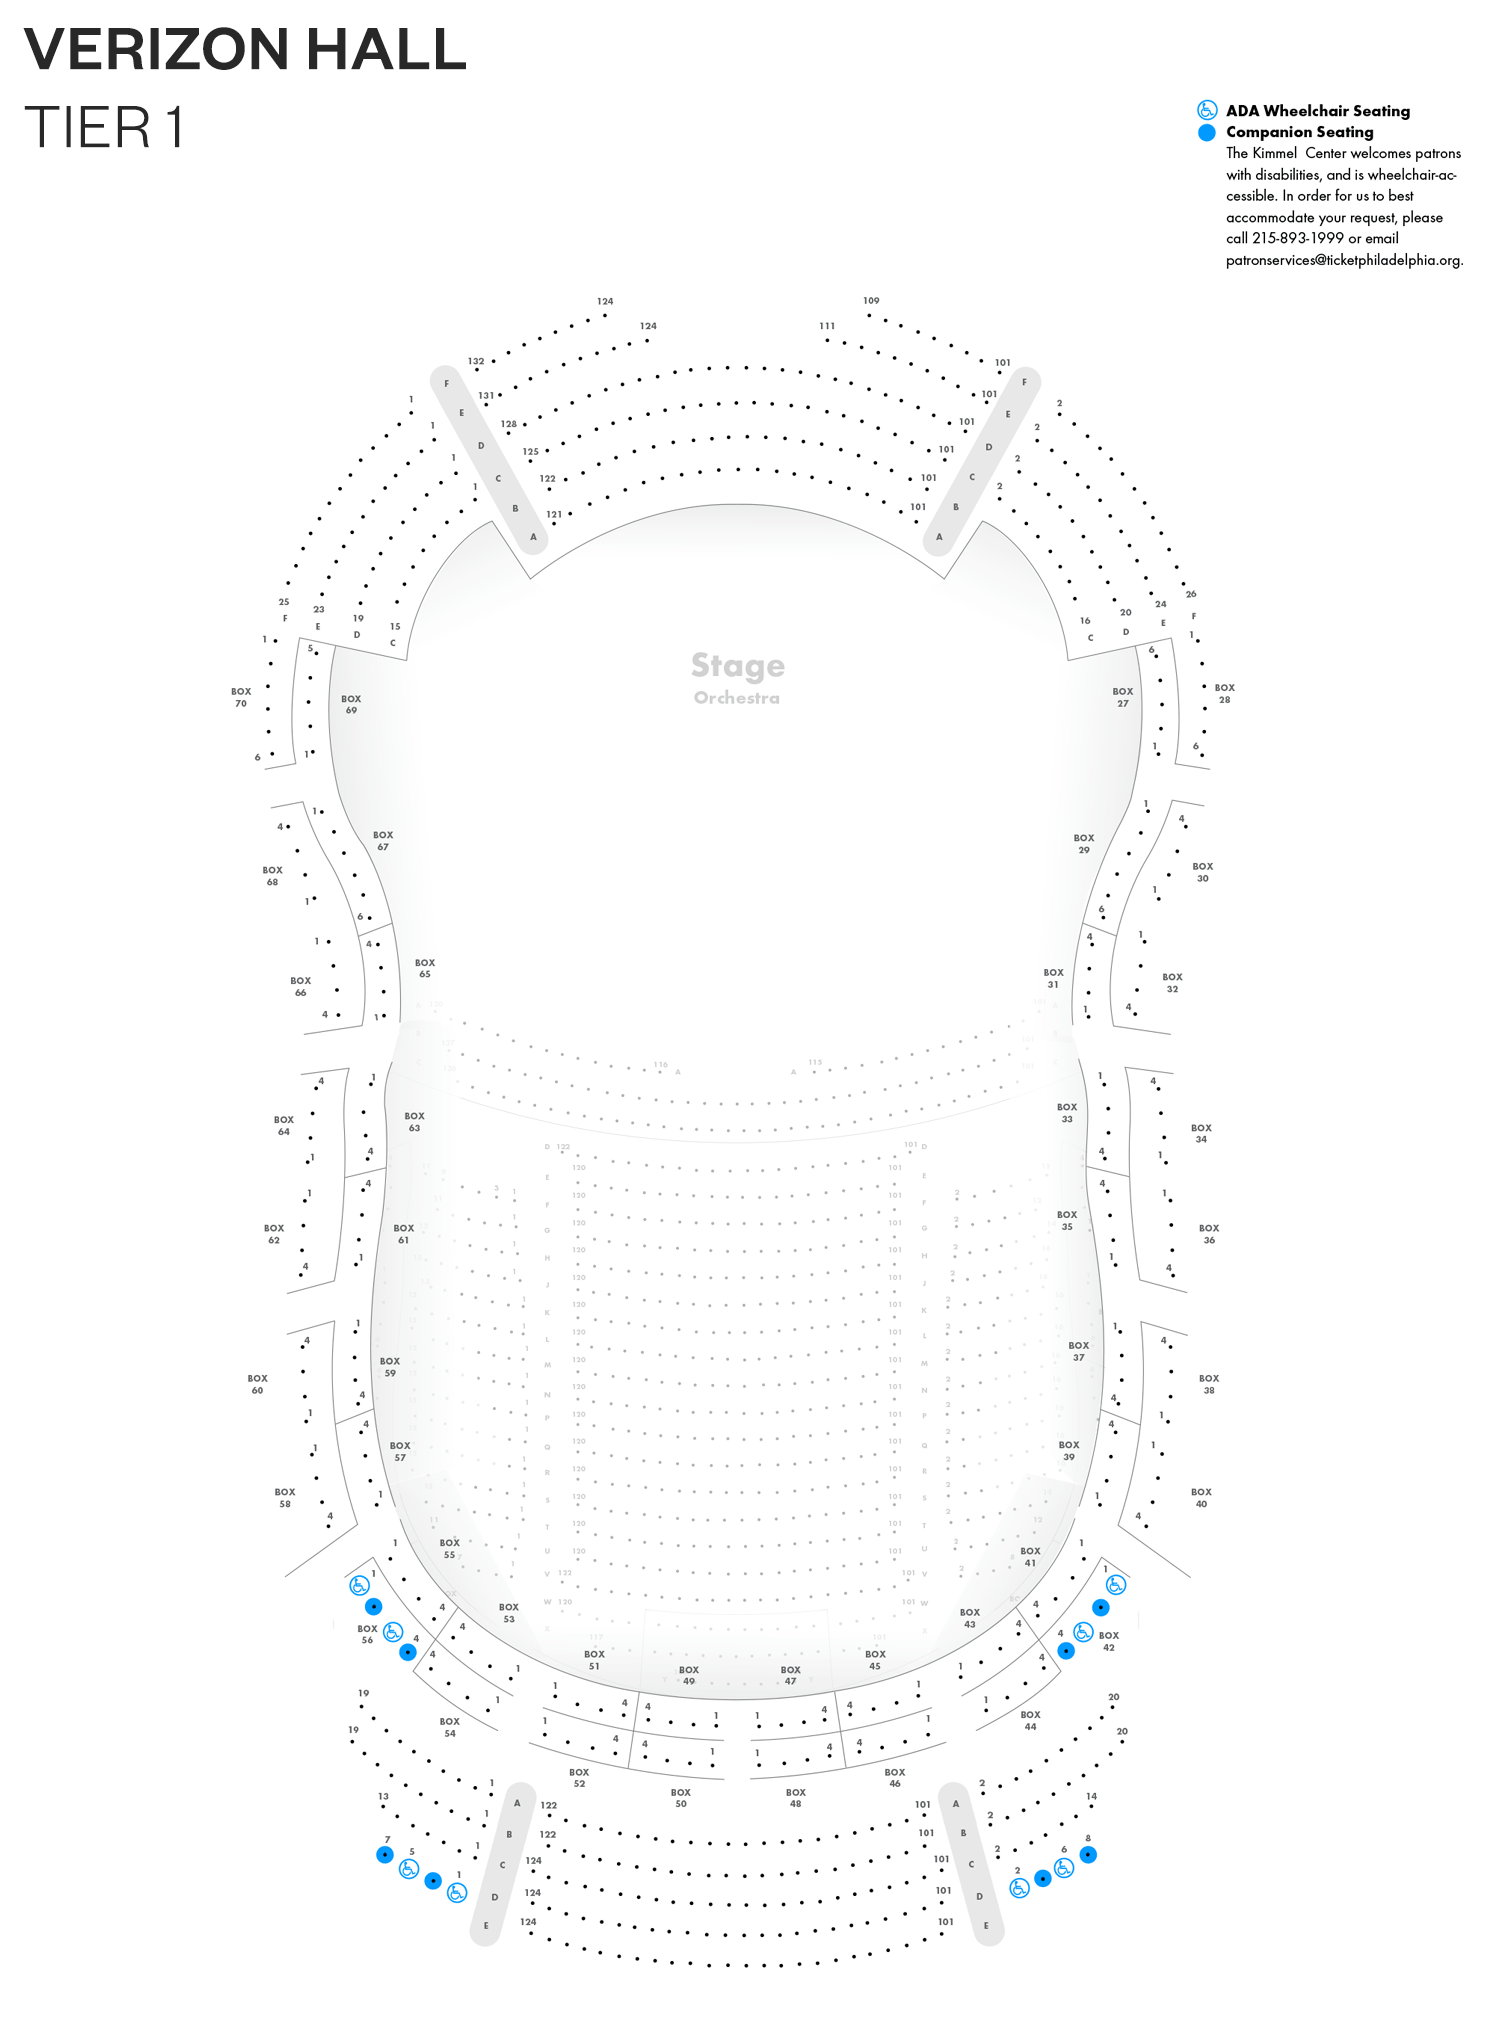 Verizon Hall - First Tier - Seating Chart